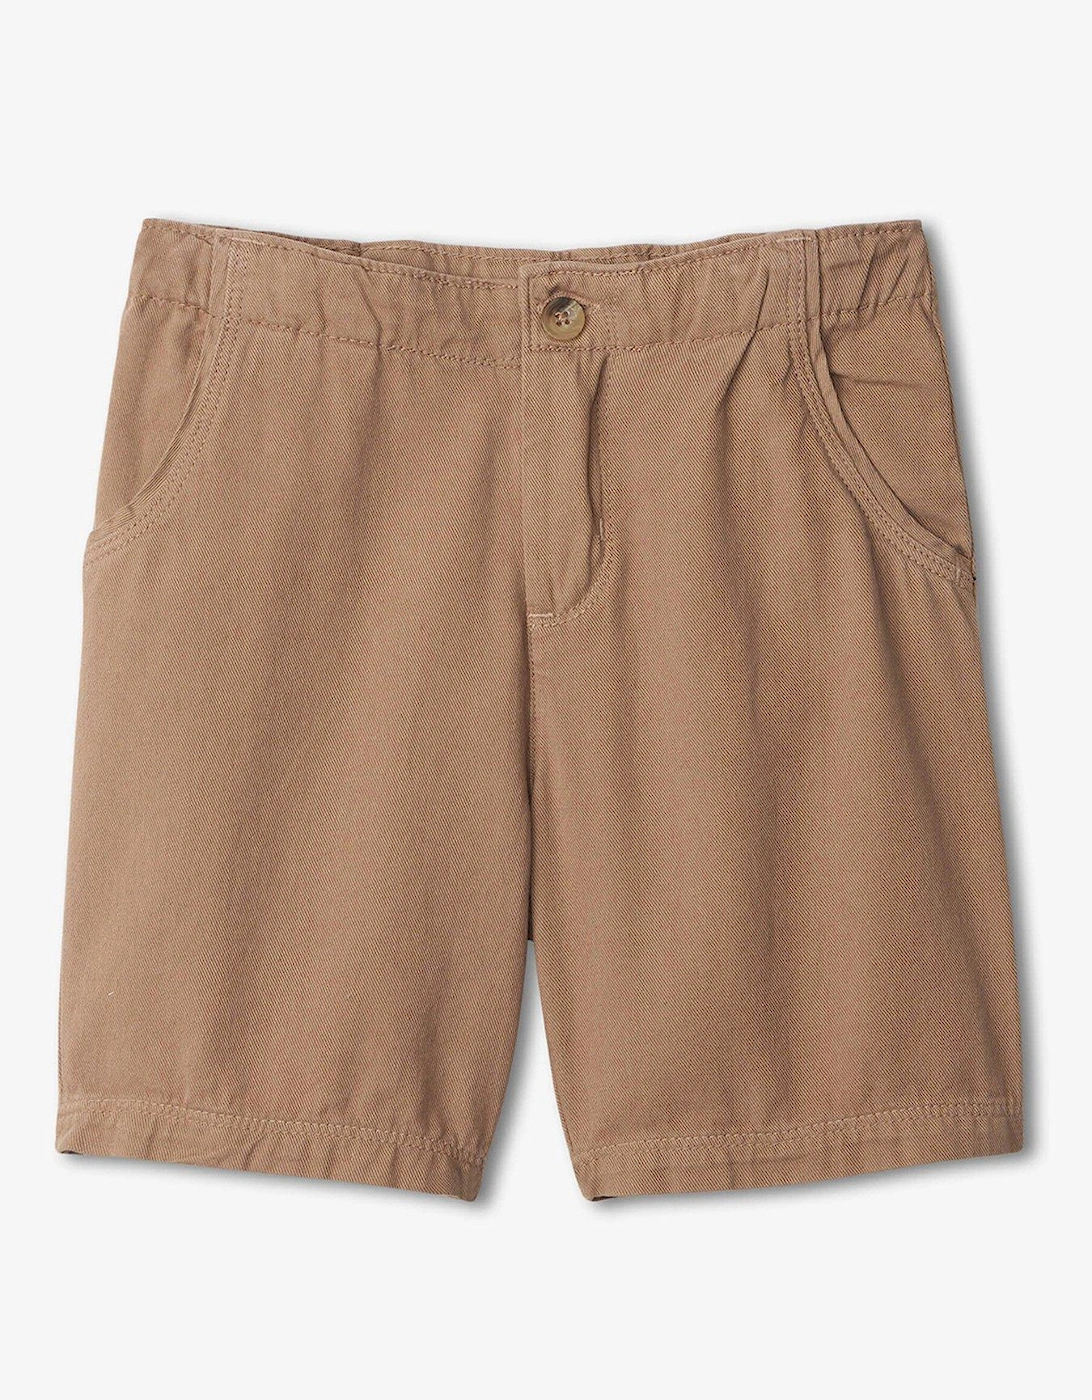 Boys Khaki Twill Shorts - Thatched, 5 of 4